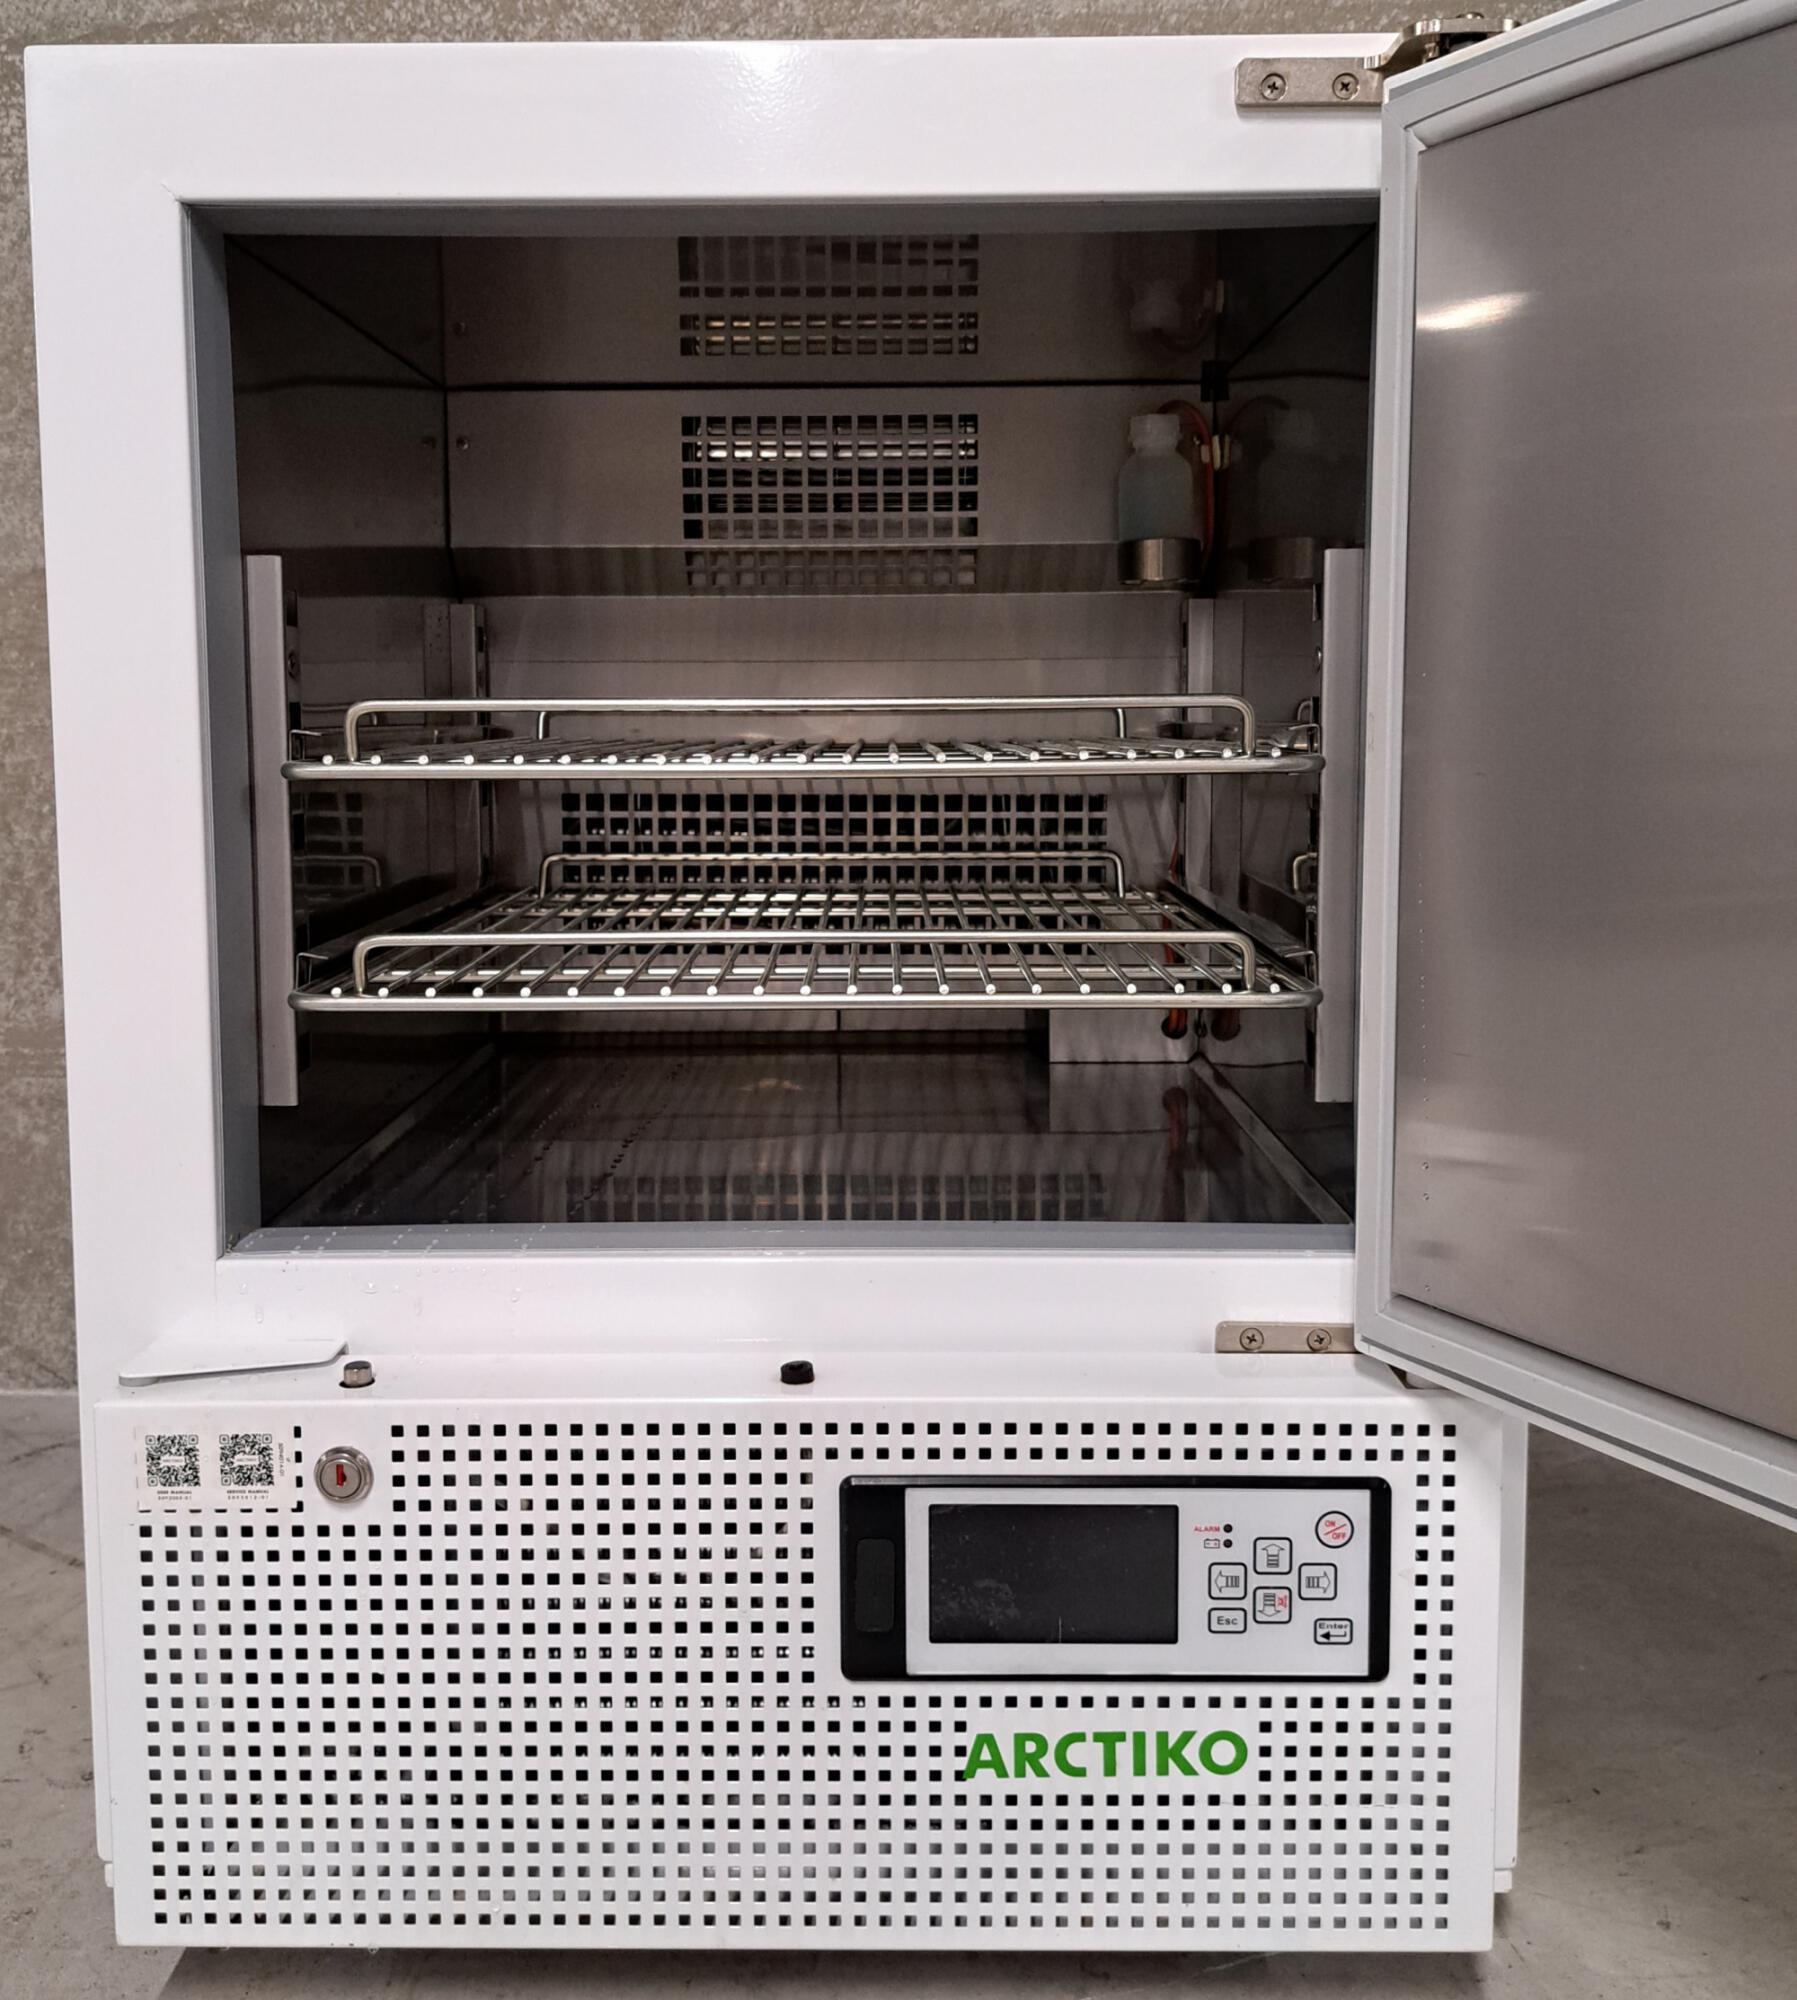 Arctiko LF 100 tafelmodel laboratorium vrieskast